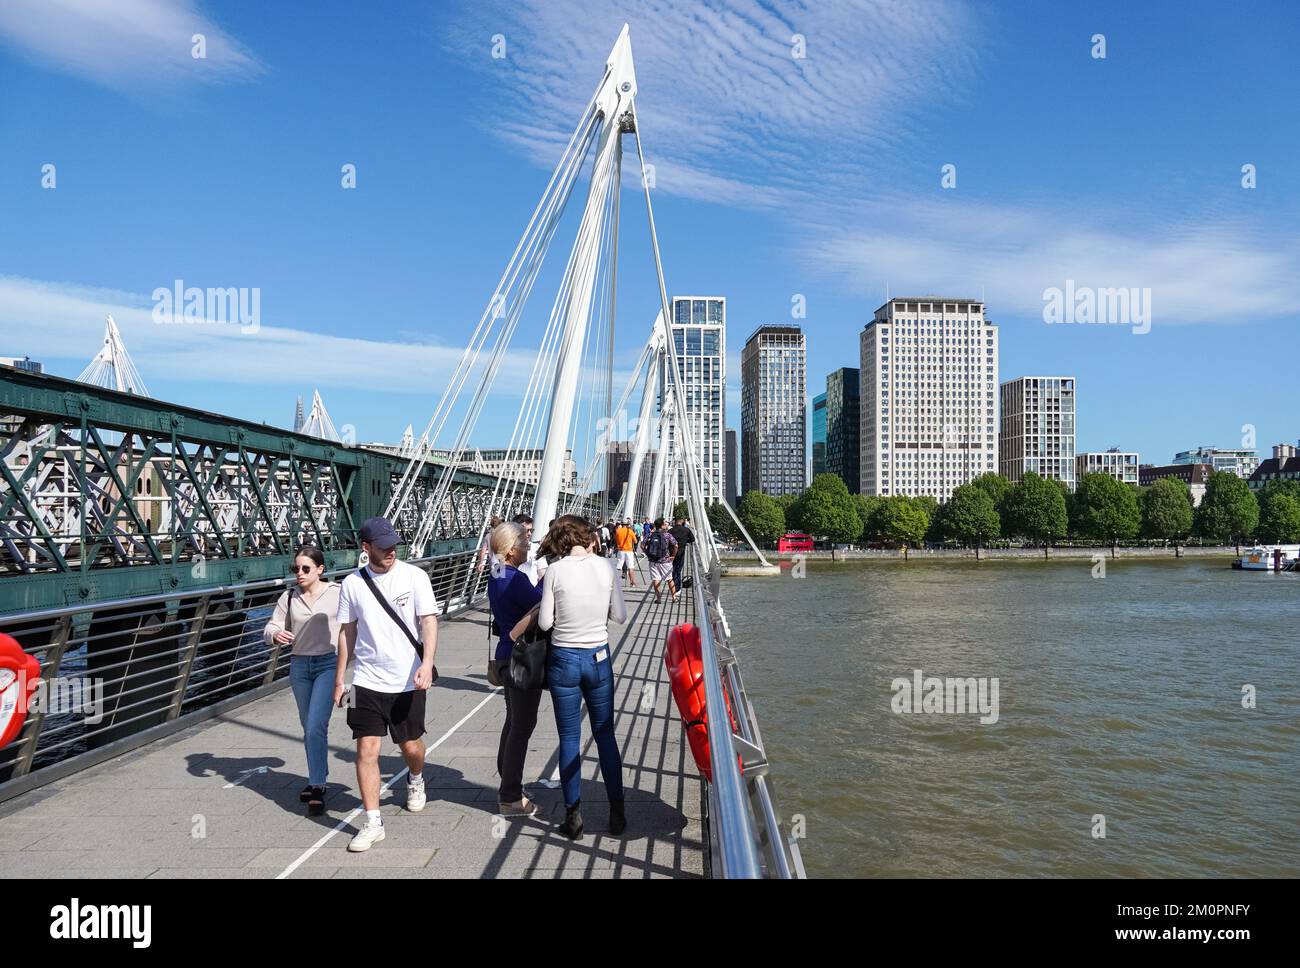 Tourists at the Golden Jubilee Bridges, London England United Kingdom UK Stock Photo